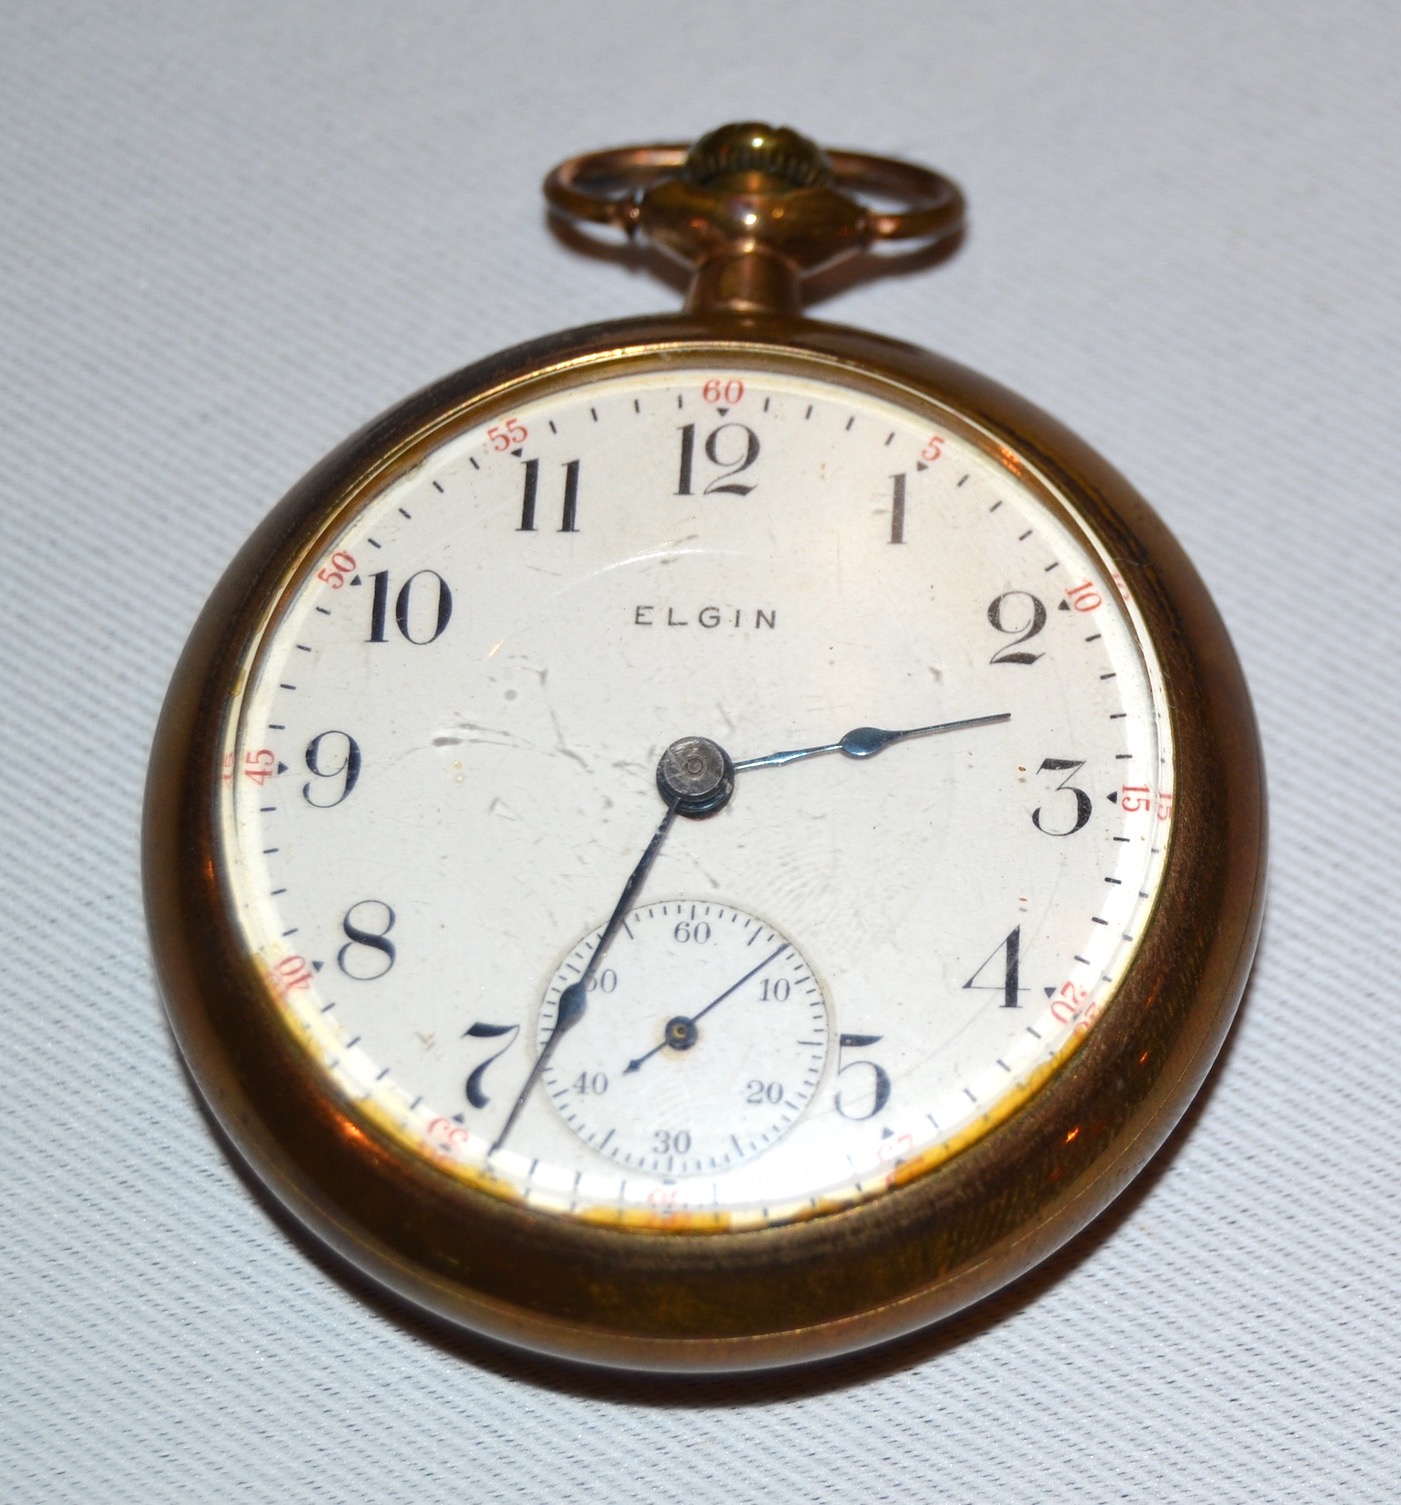 Bargain John's Antiques | Elgin Antique Pocket Watch - Bargain John's ...